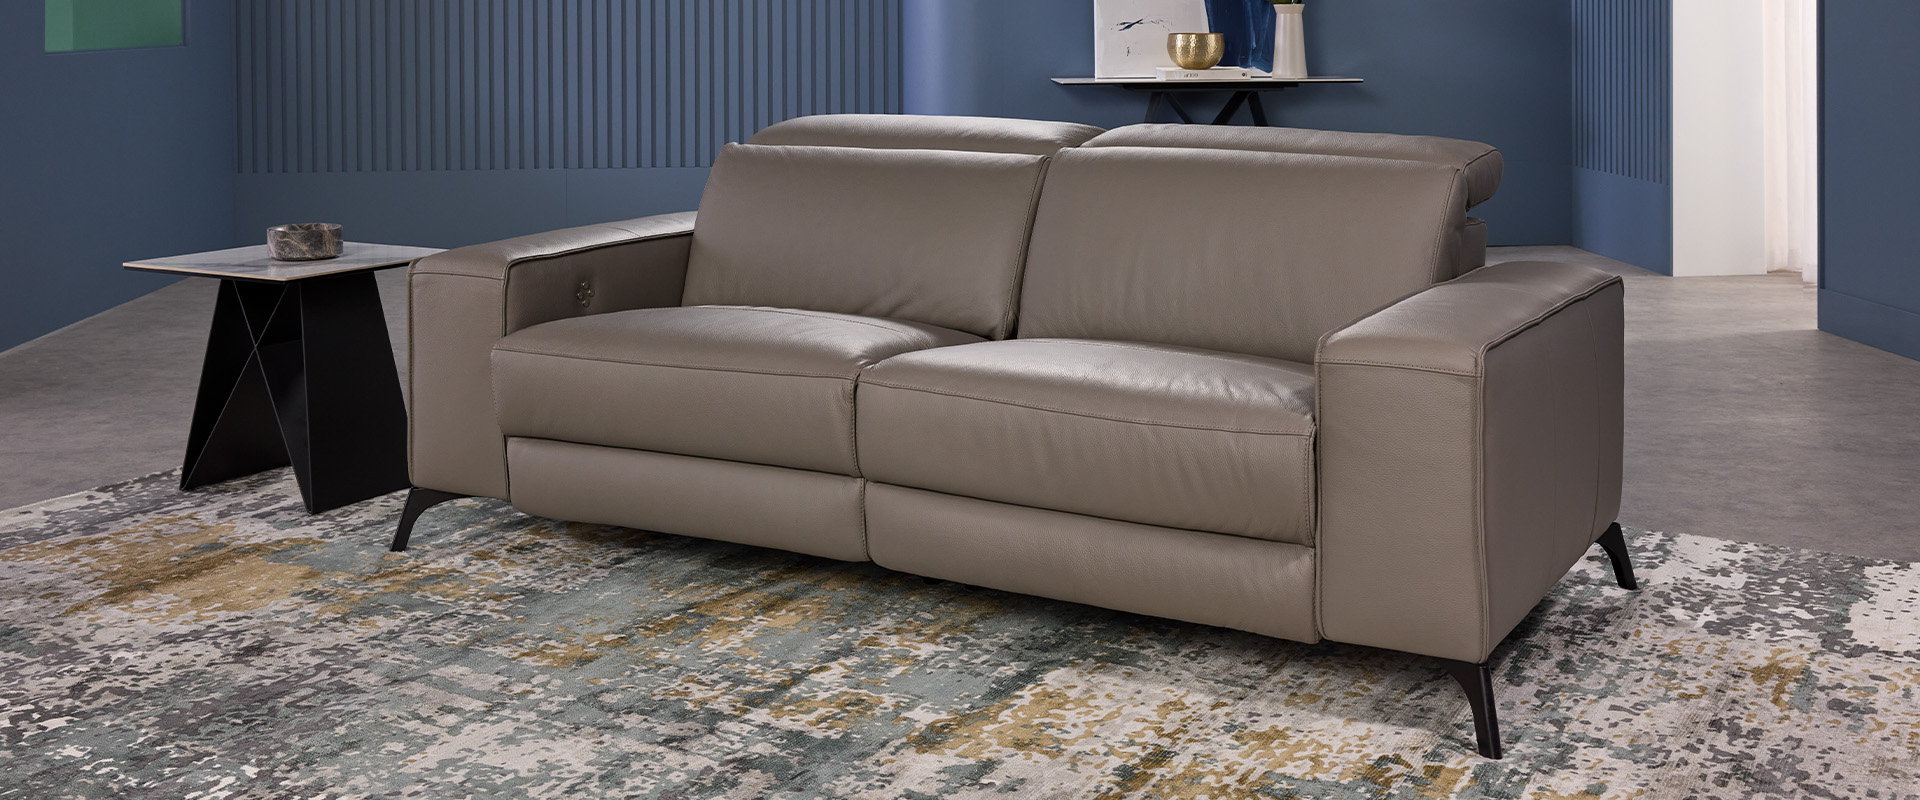 Vitorio Leather Sofa Modern Recliner